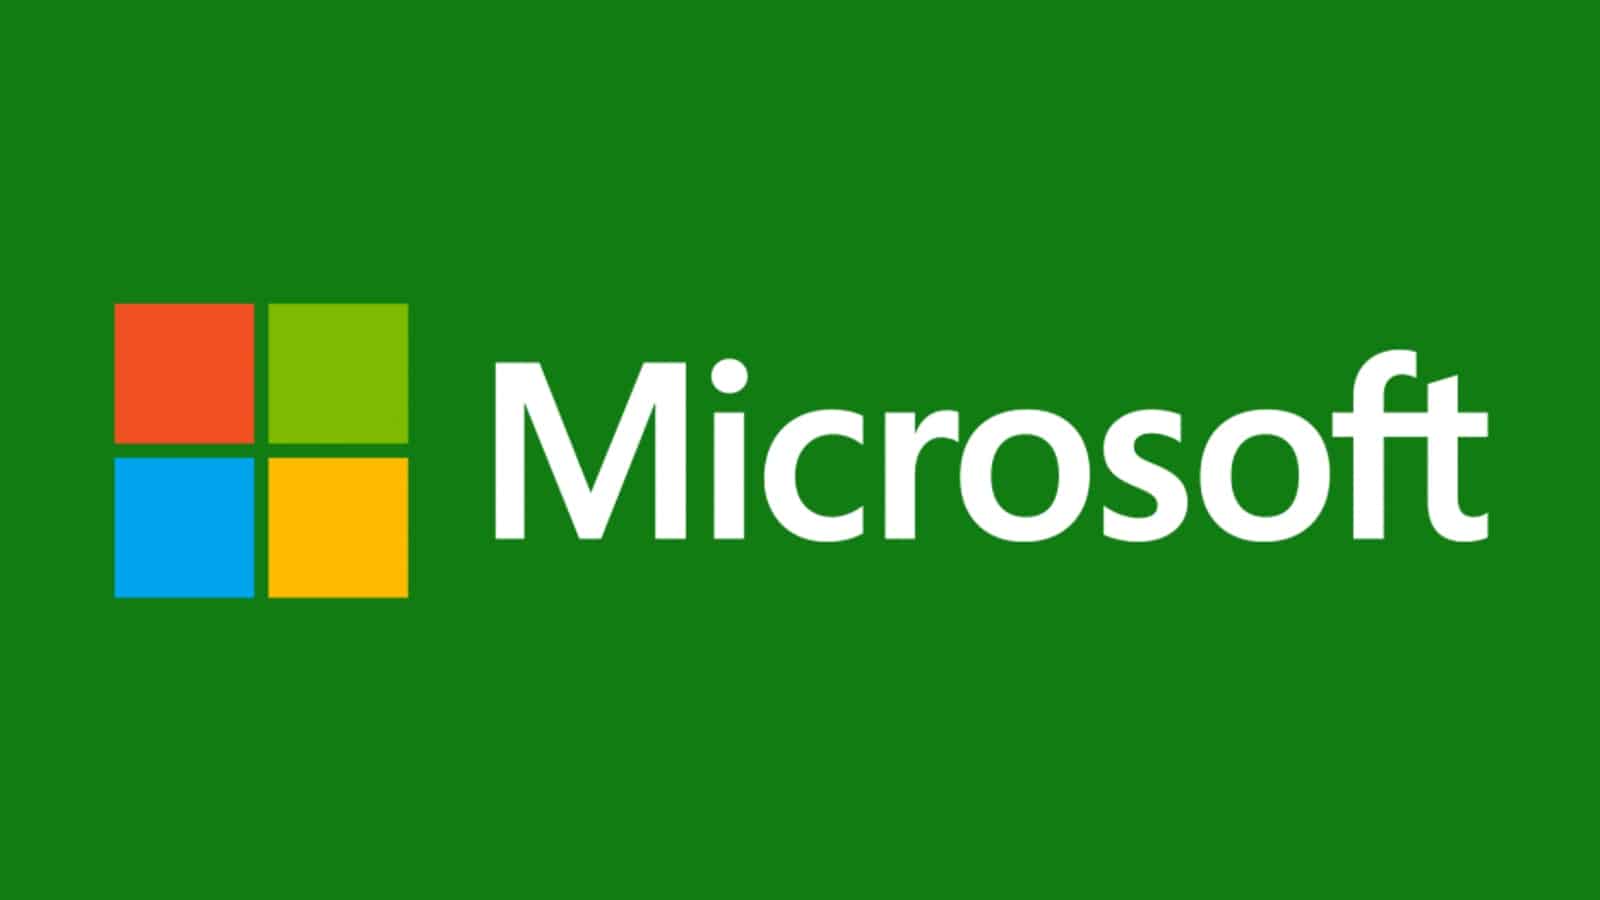 Microsoft logo green